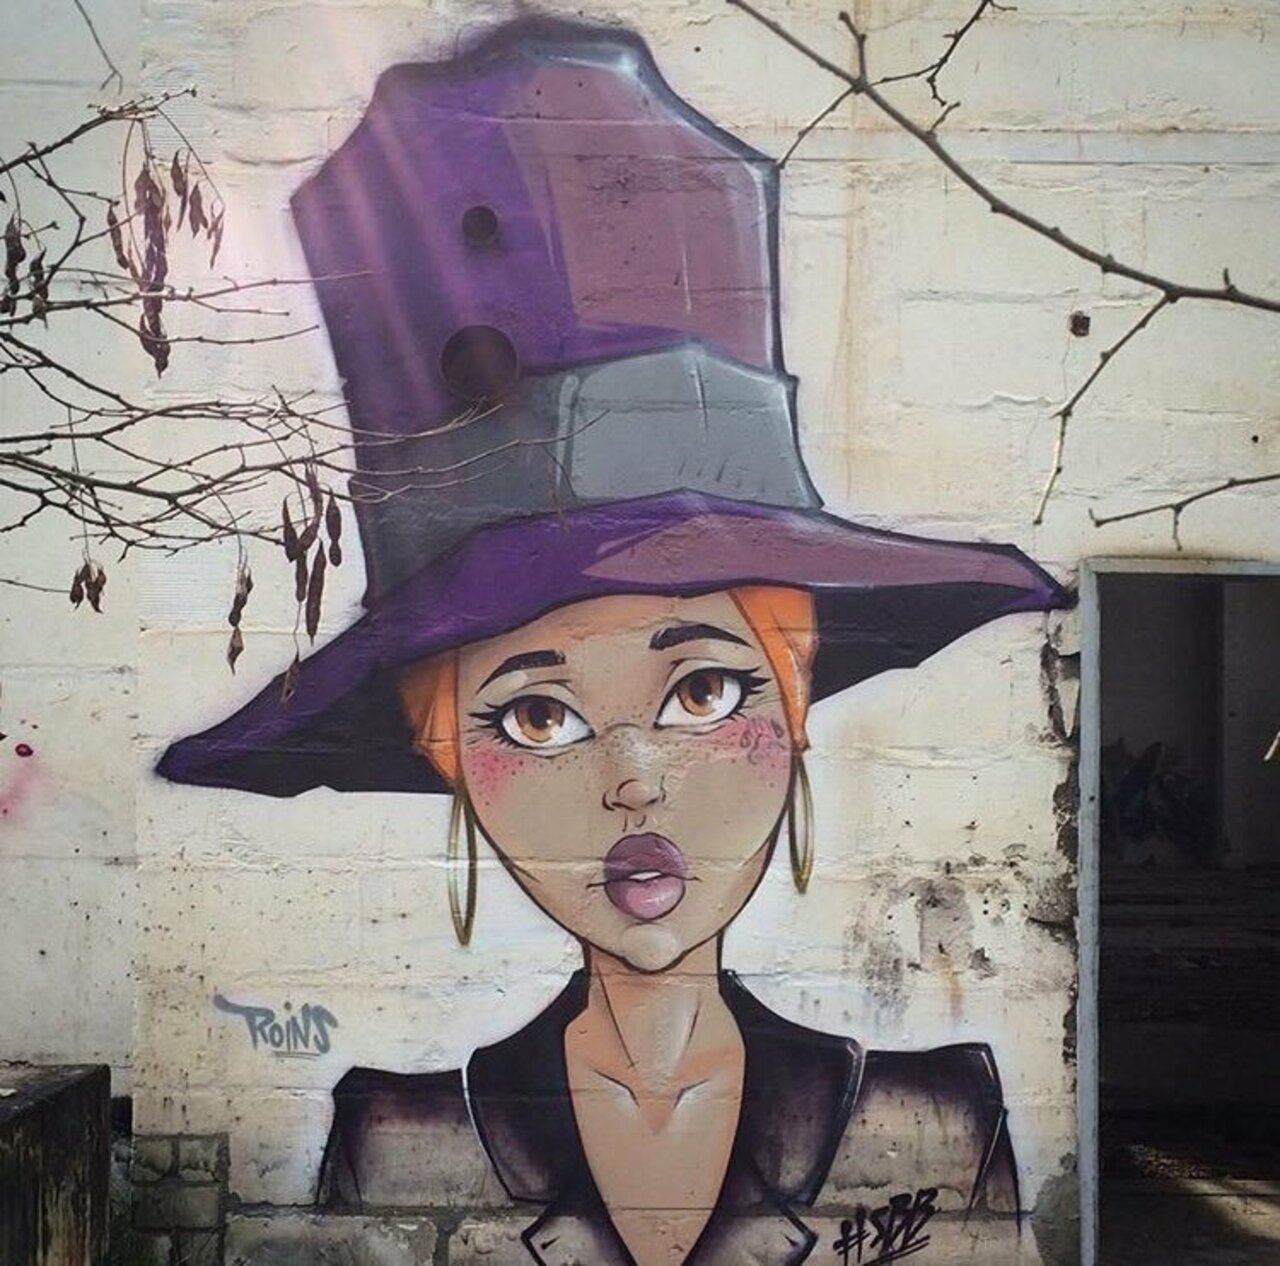 By Stereo Heat #art #mural #graffiti #streetart https://t.co/FxxFQNBPcG